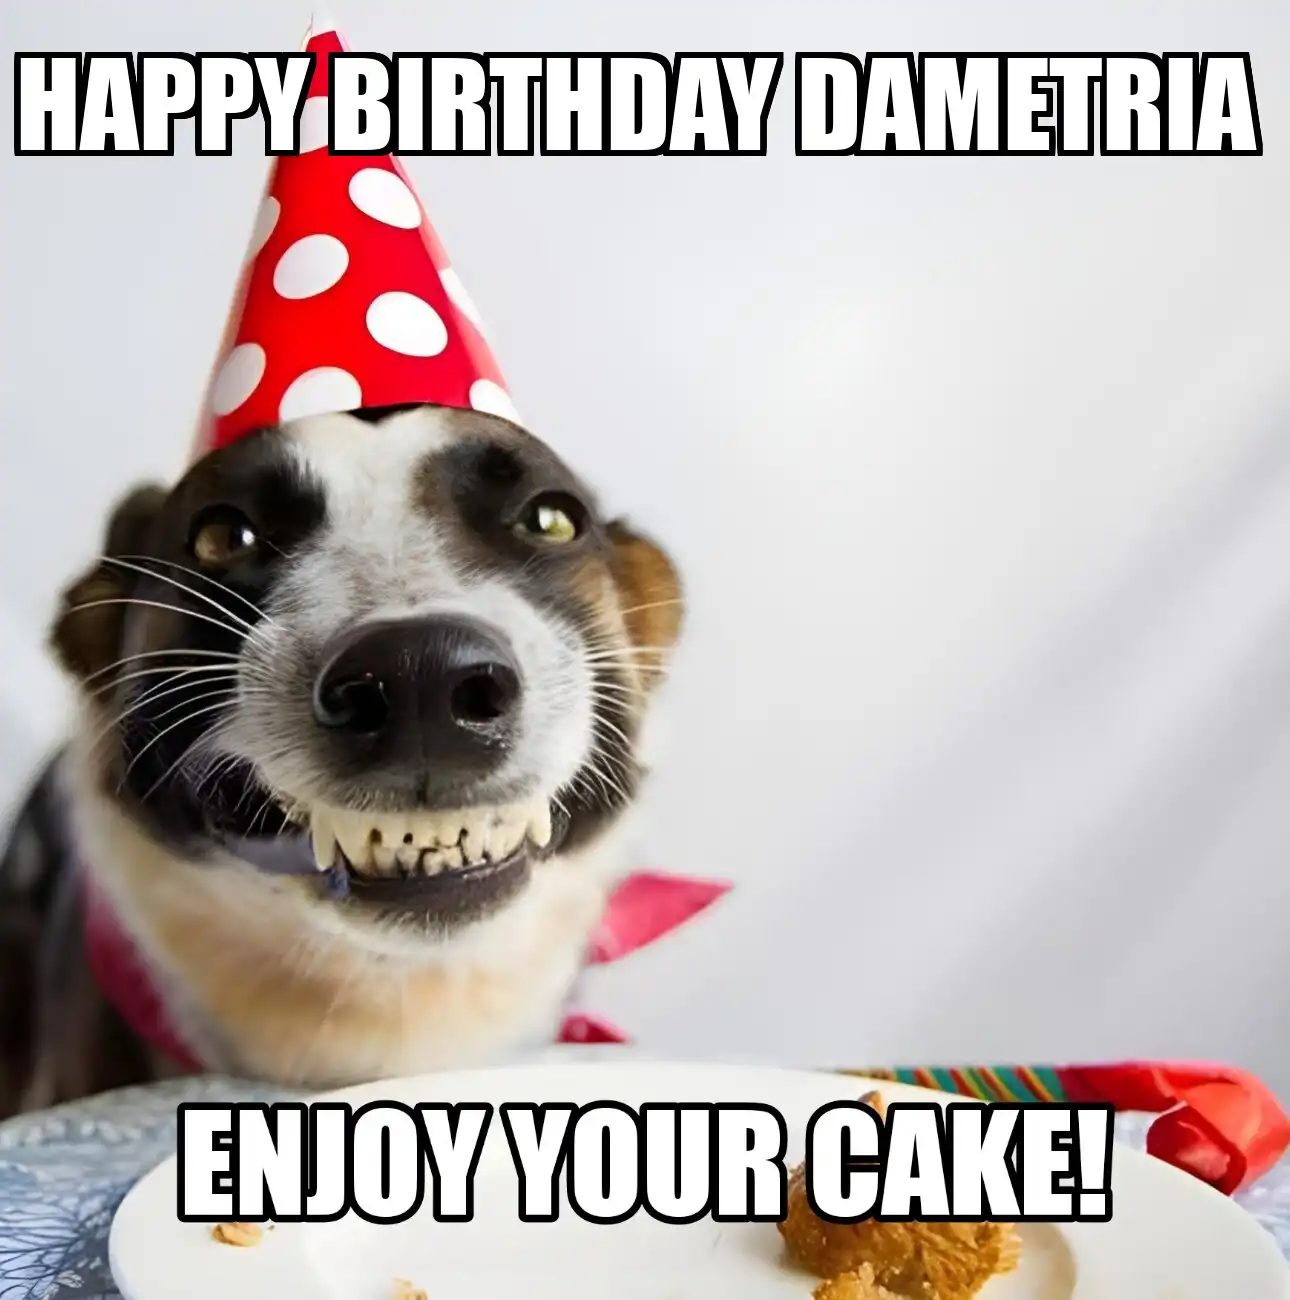 Happy Birthday Dametria Enjoy Your Cake Dog Meme